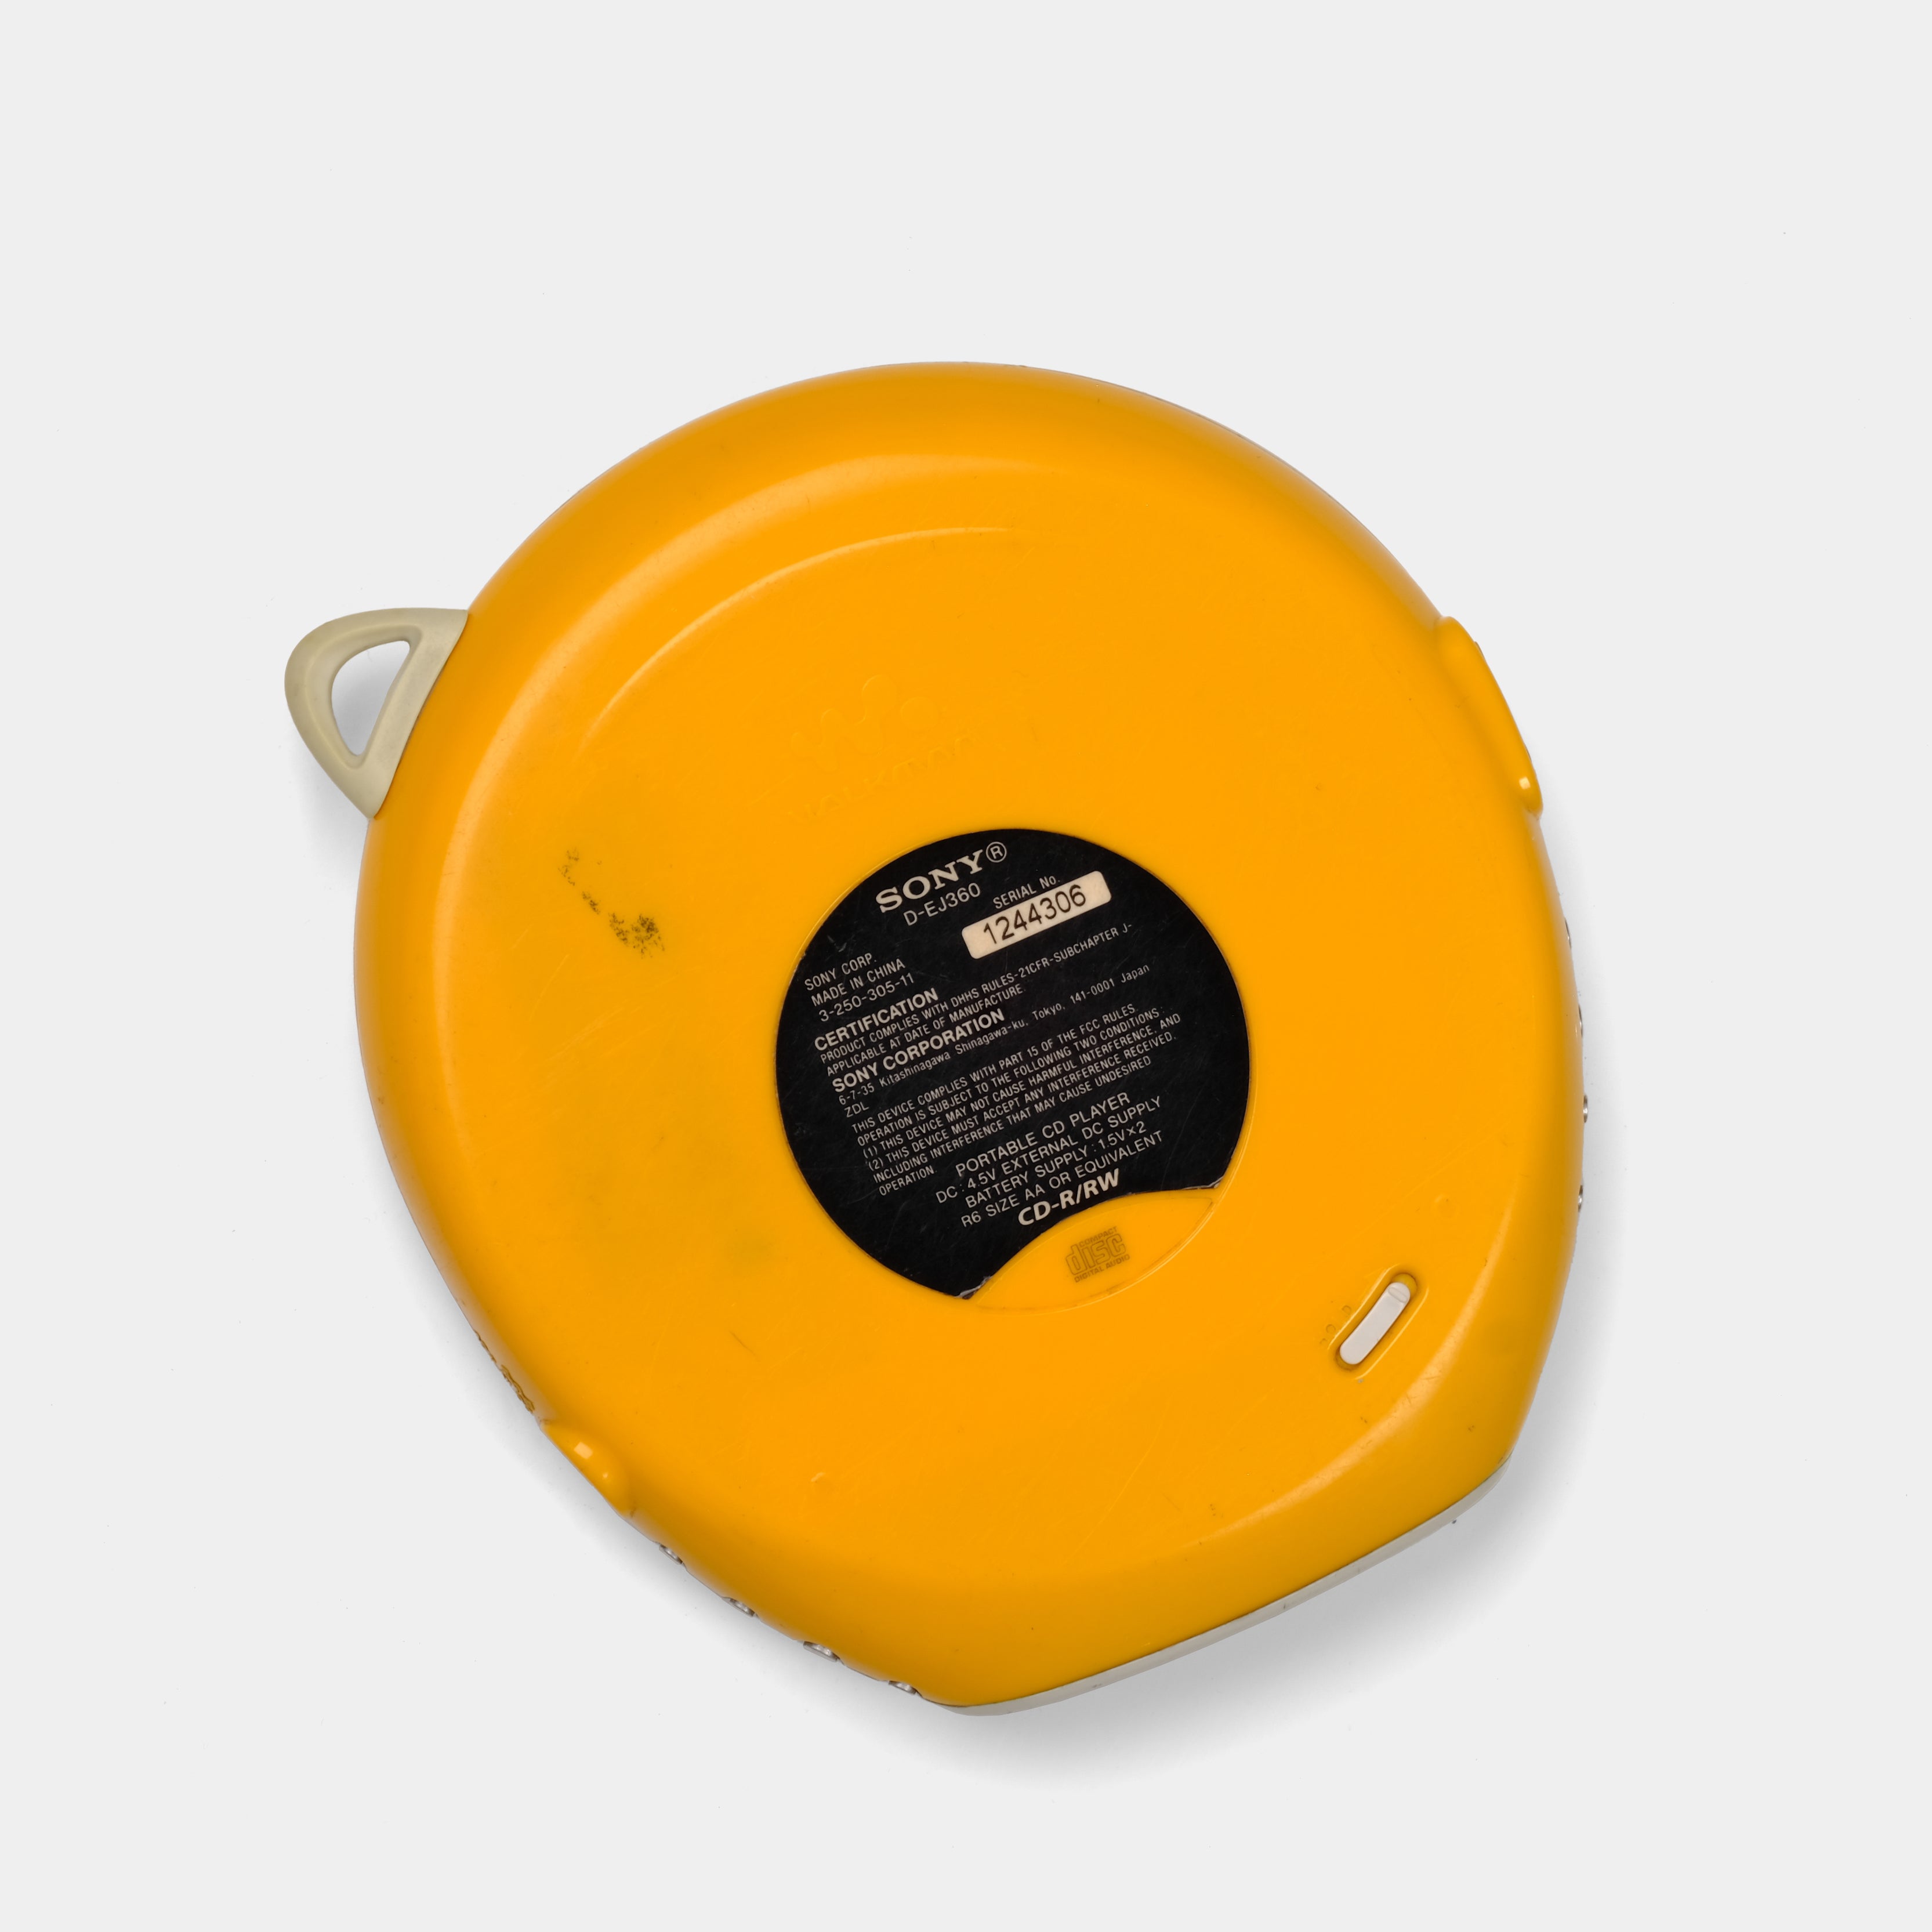 Sony Walkman D-EJ360 Yellow Portable CD Player (B grade)